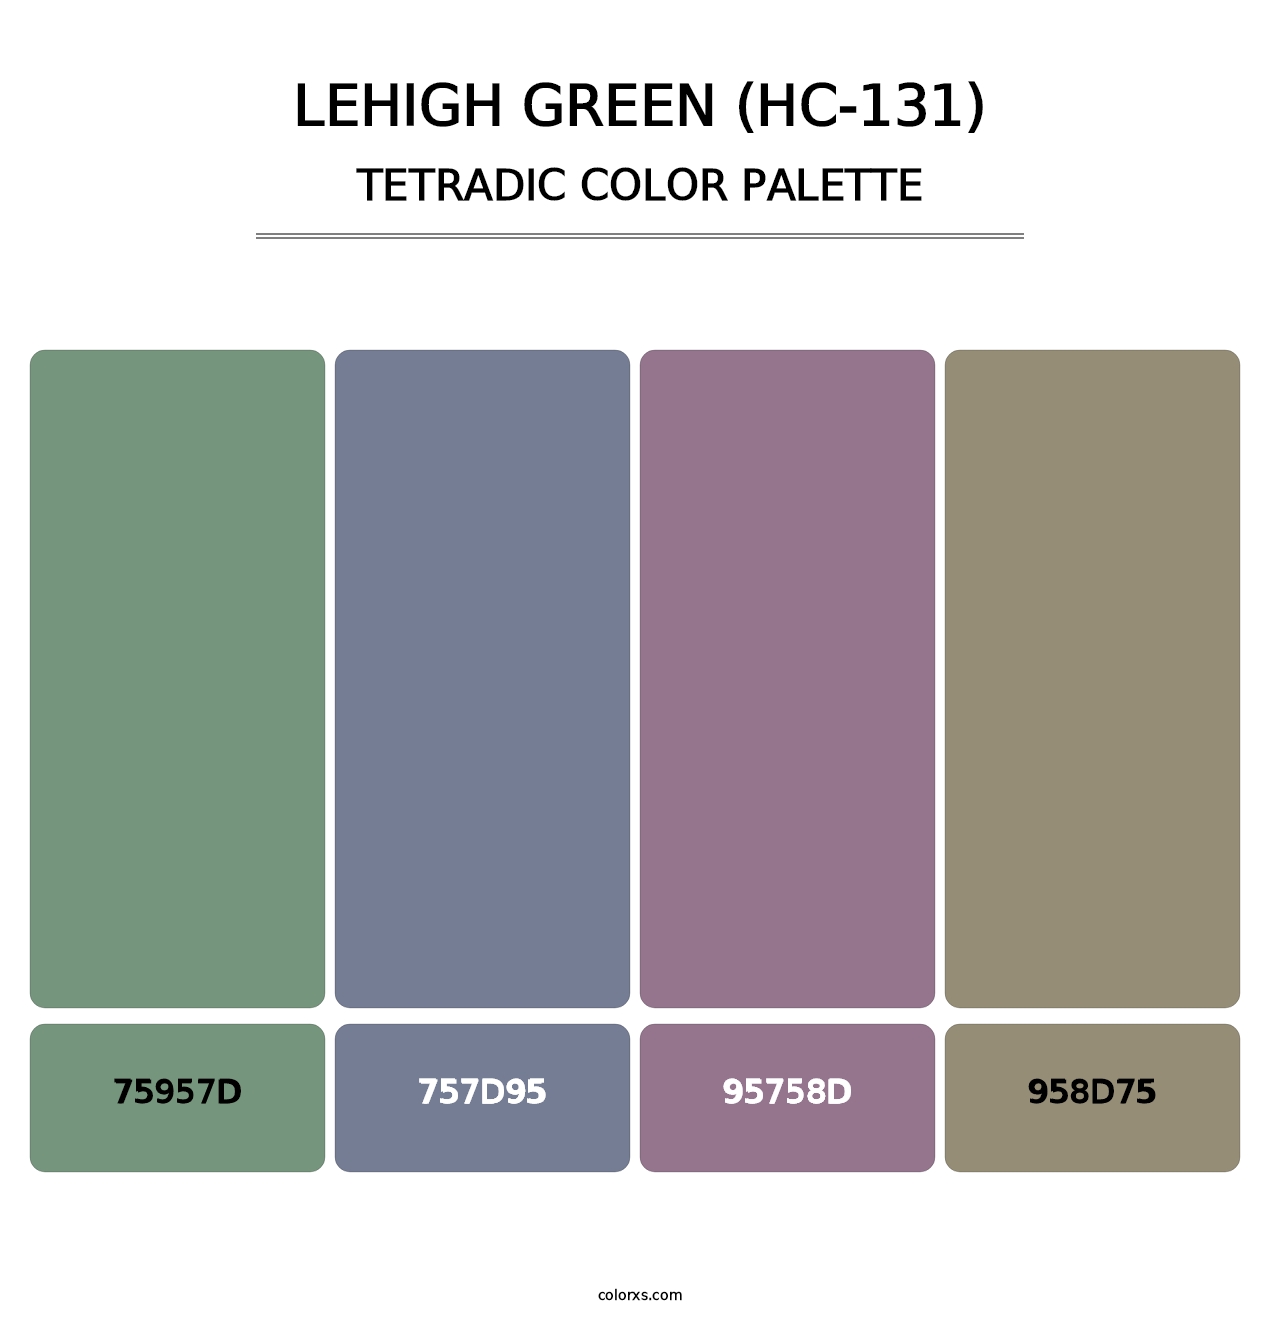 Lehigh Green (HC-131) - Tetradic Color Palette